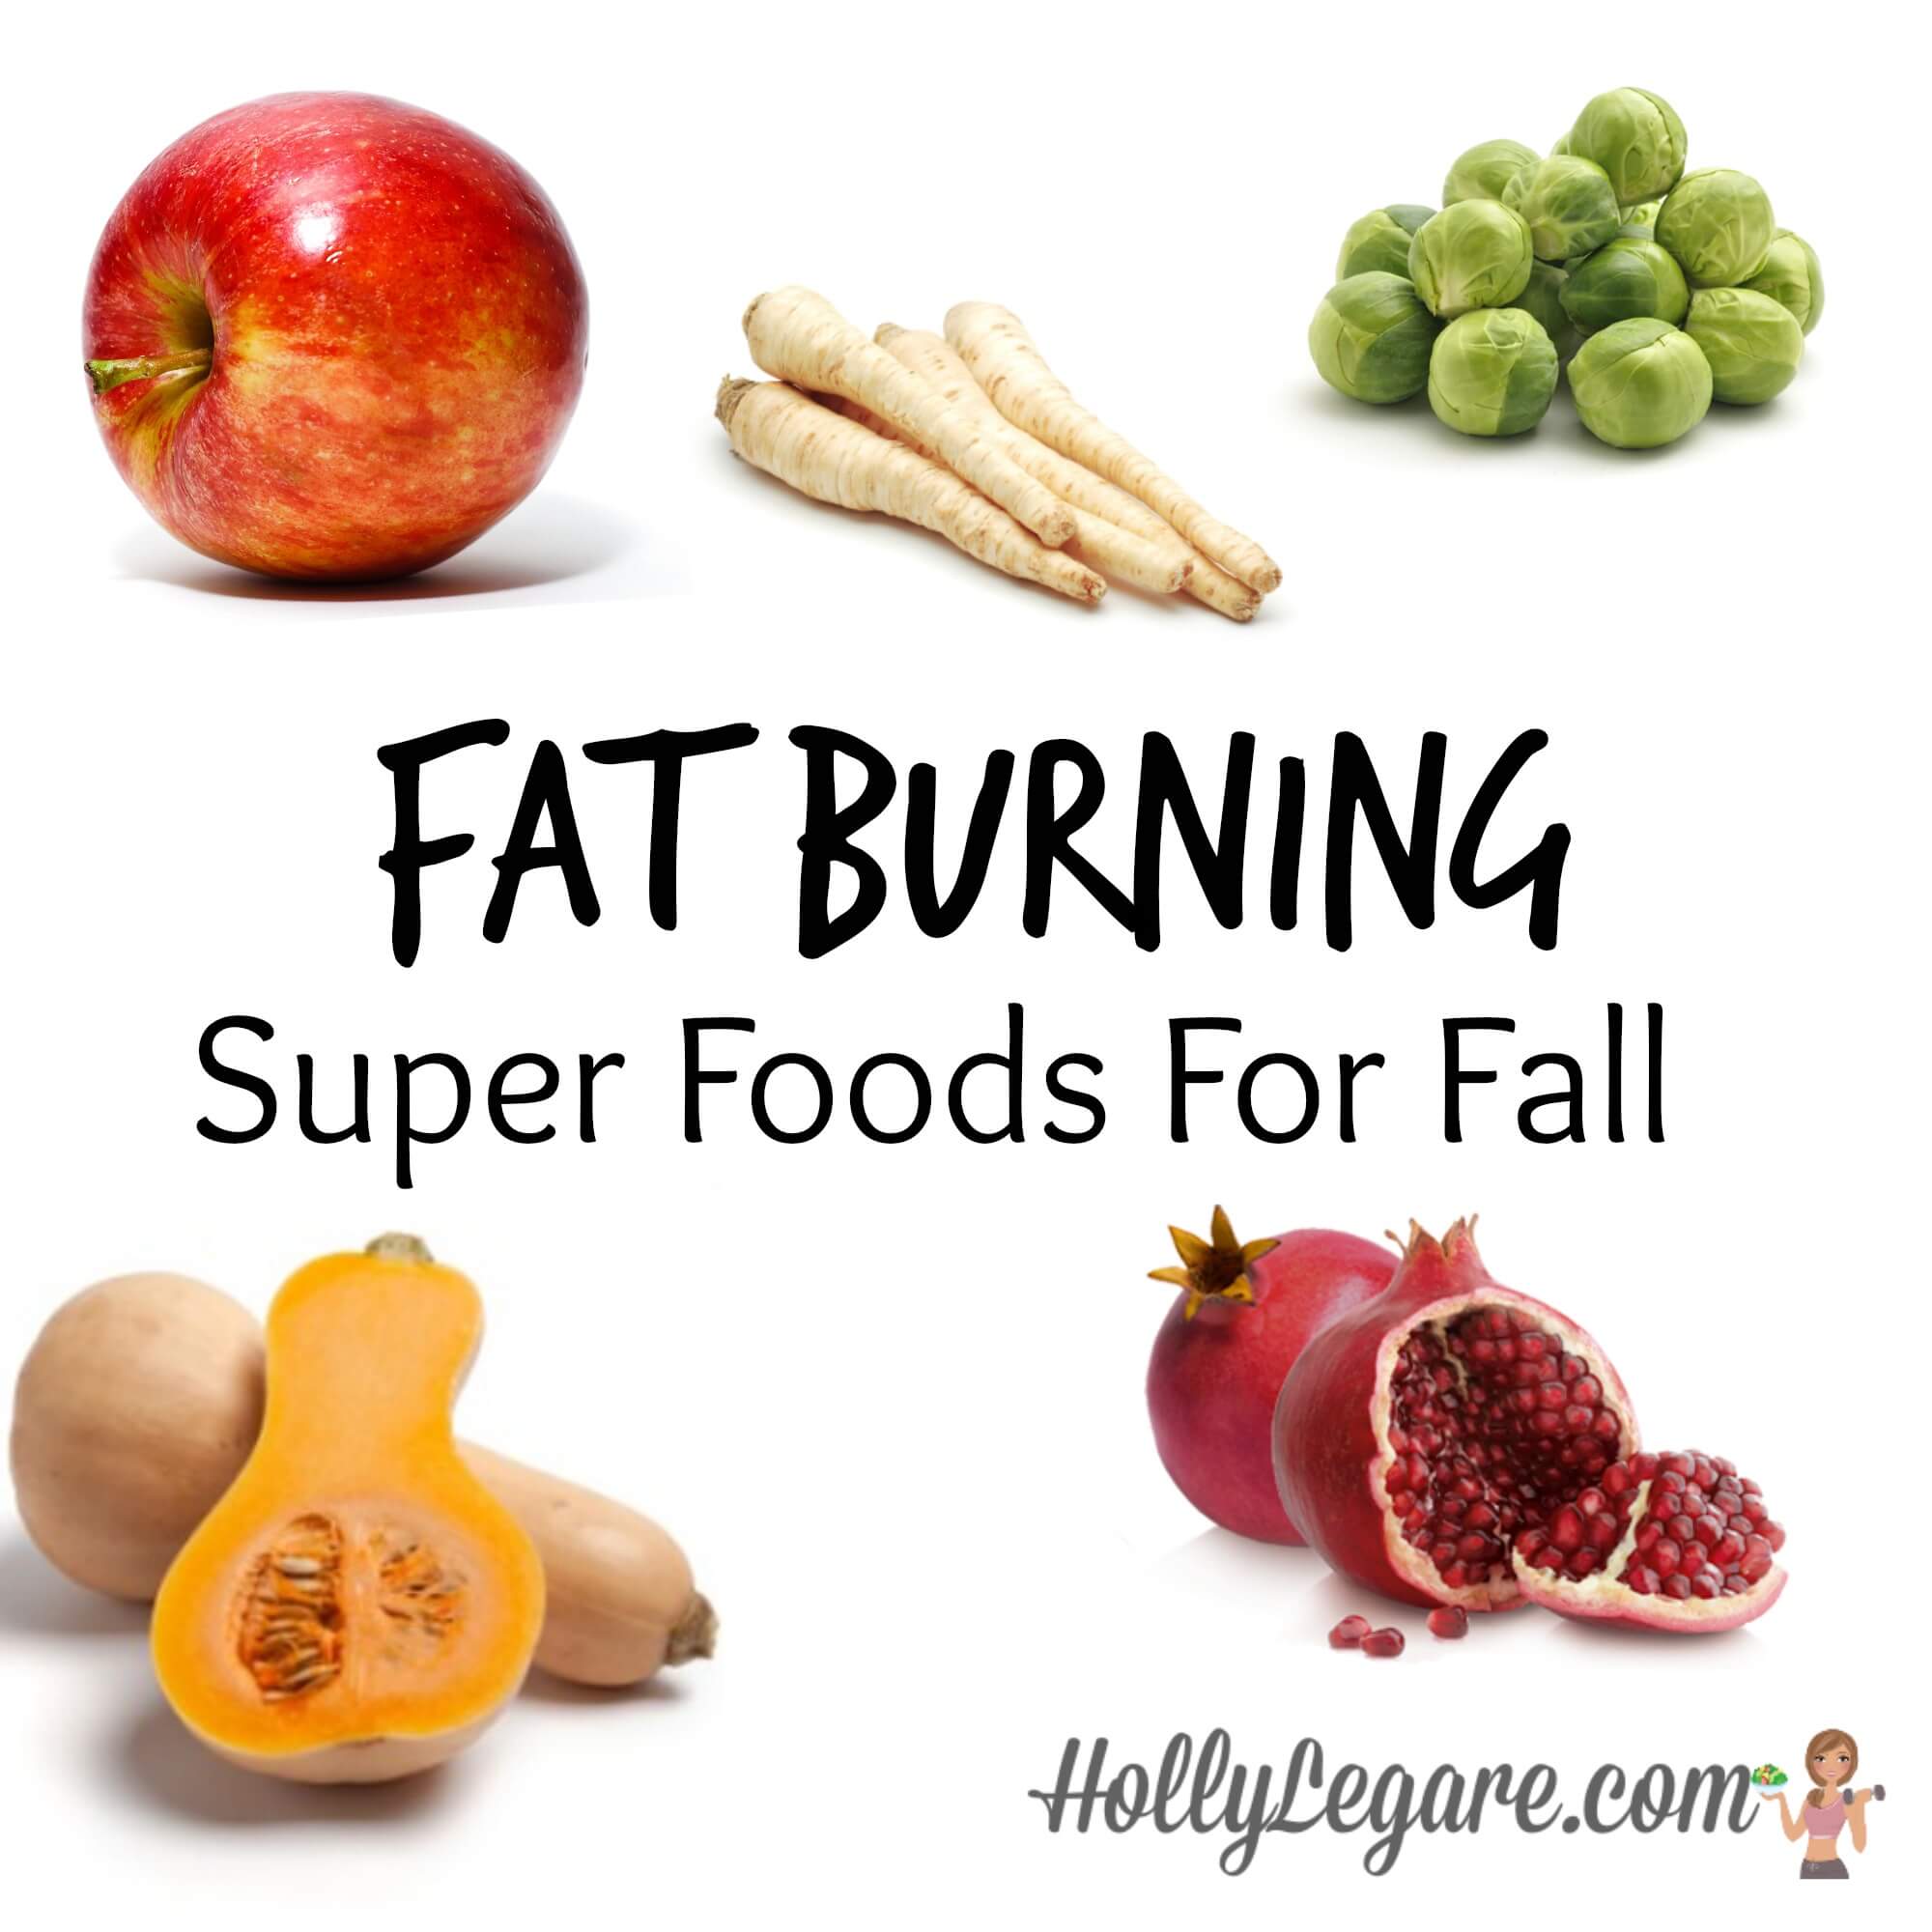 Fat Burning Super Foods